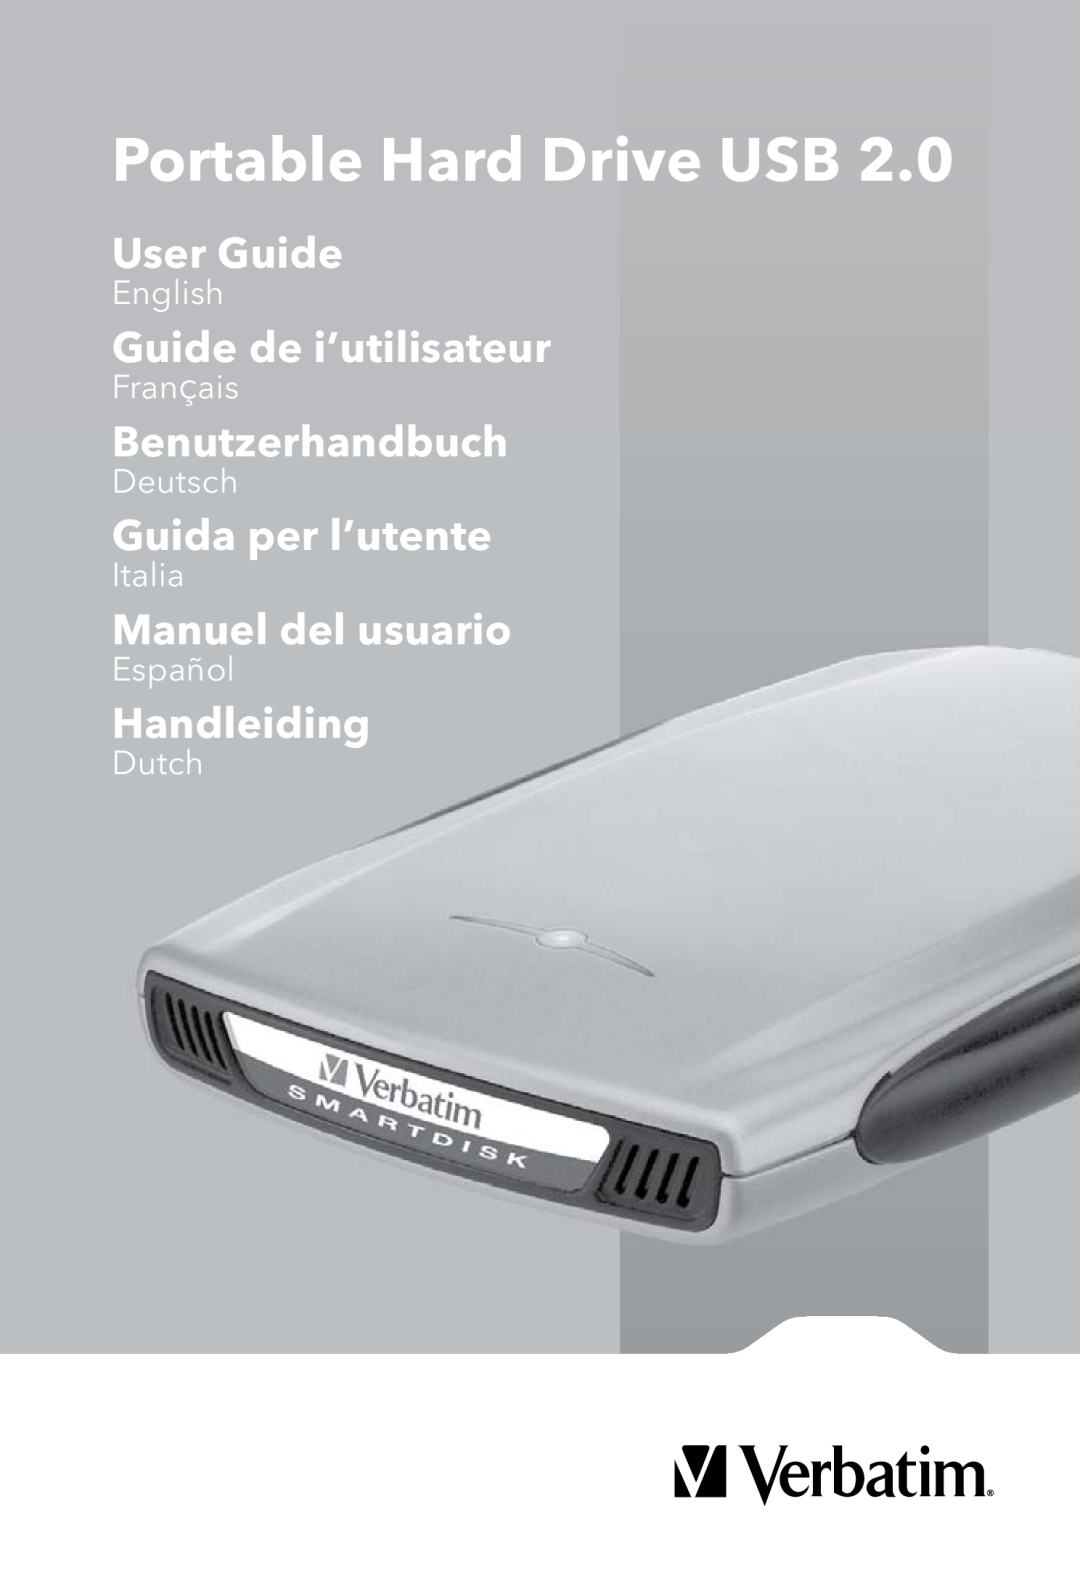 Verbatim Portable Hard Drive USB 2.0 manual User Guide, Guide de i’utilisateur, Benutzerhandbuch, Guida per l’utente 